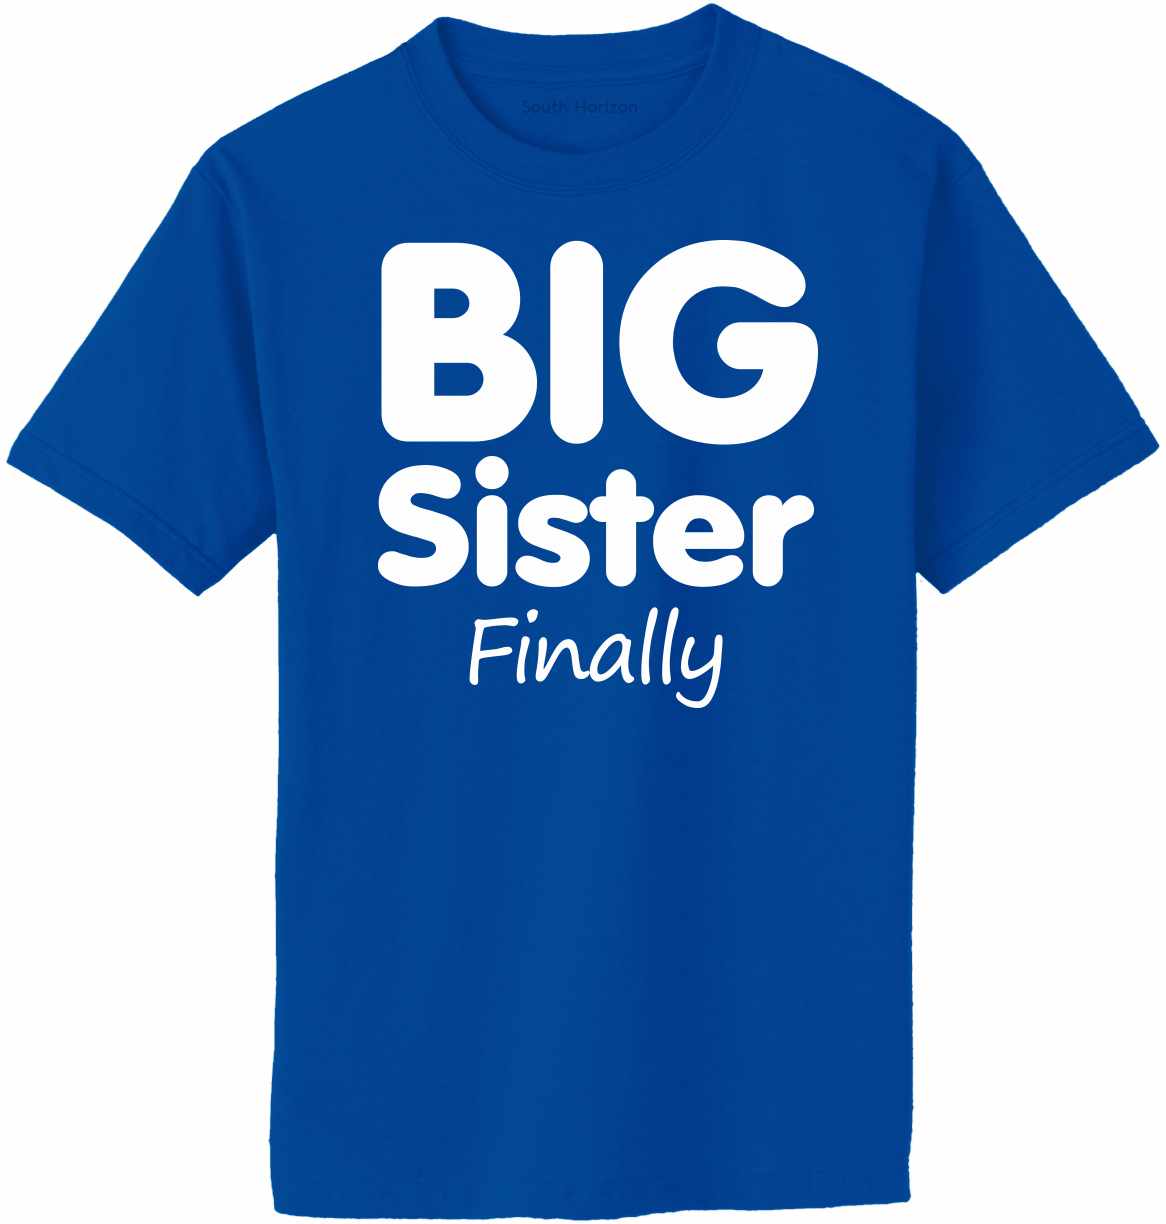 Big Sister Finally on Adult T-Shirt (#1376-1)